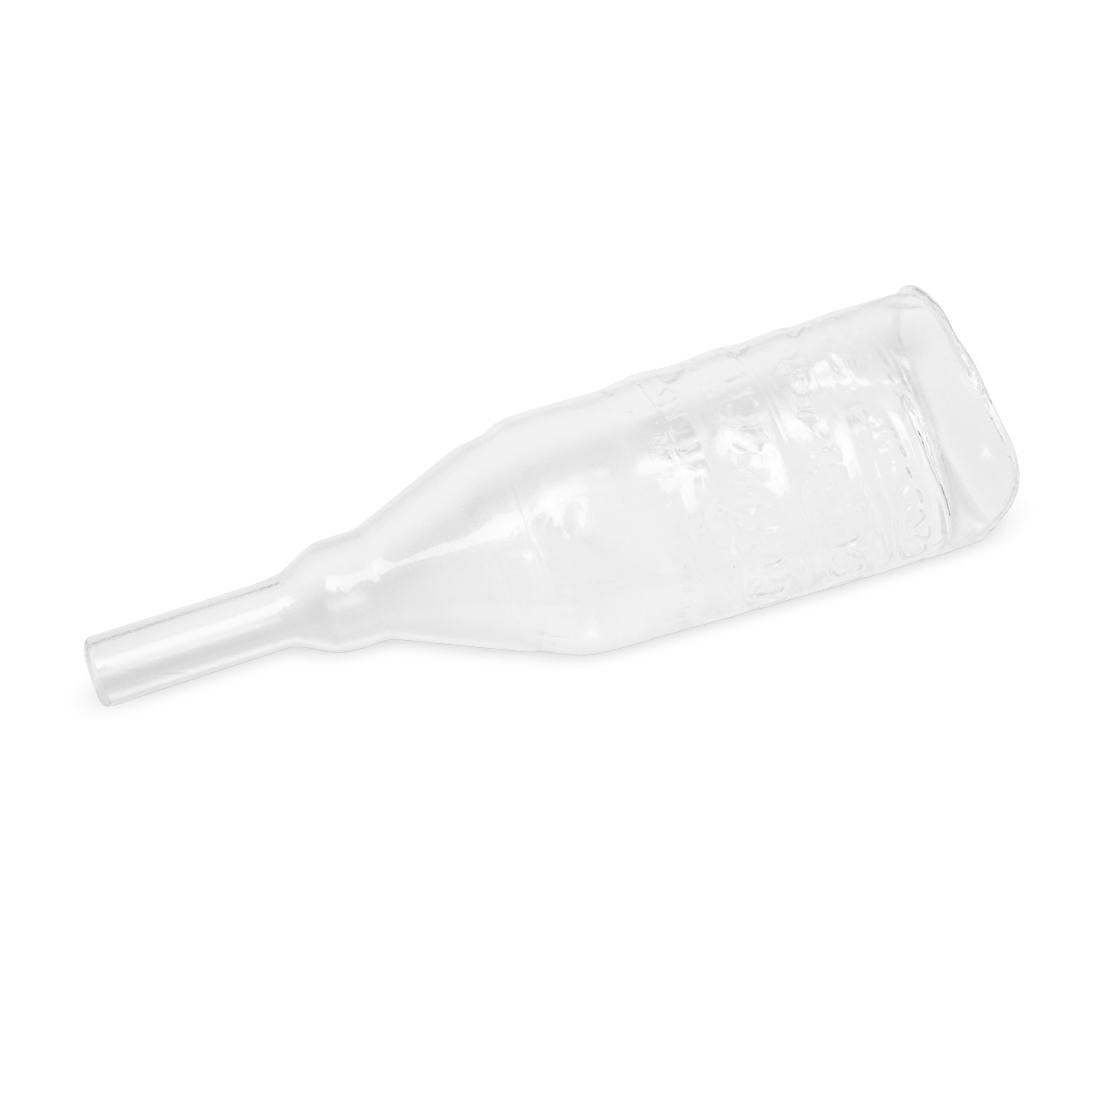 UltraFlex Silicone Male External Catheters,Medium, Box of 30